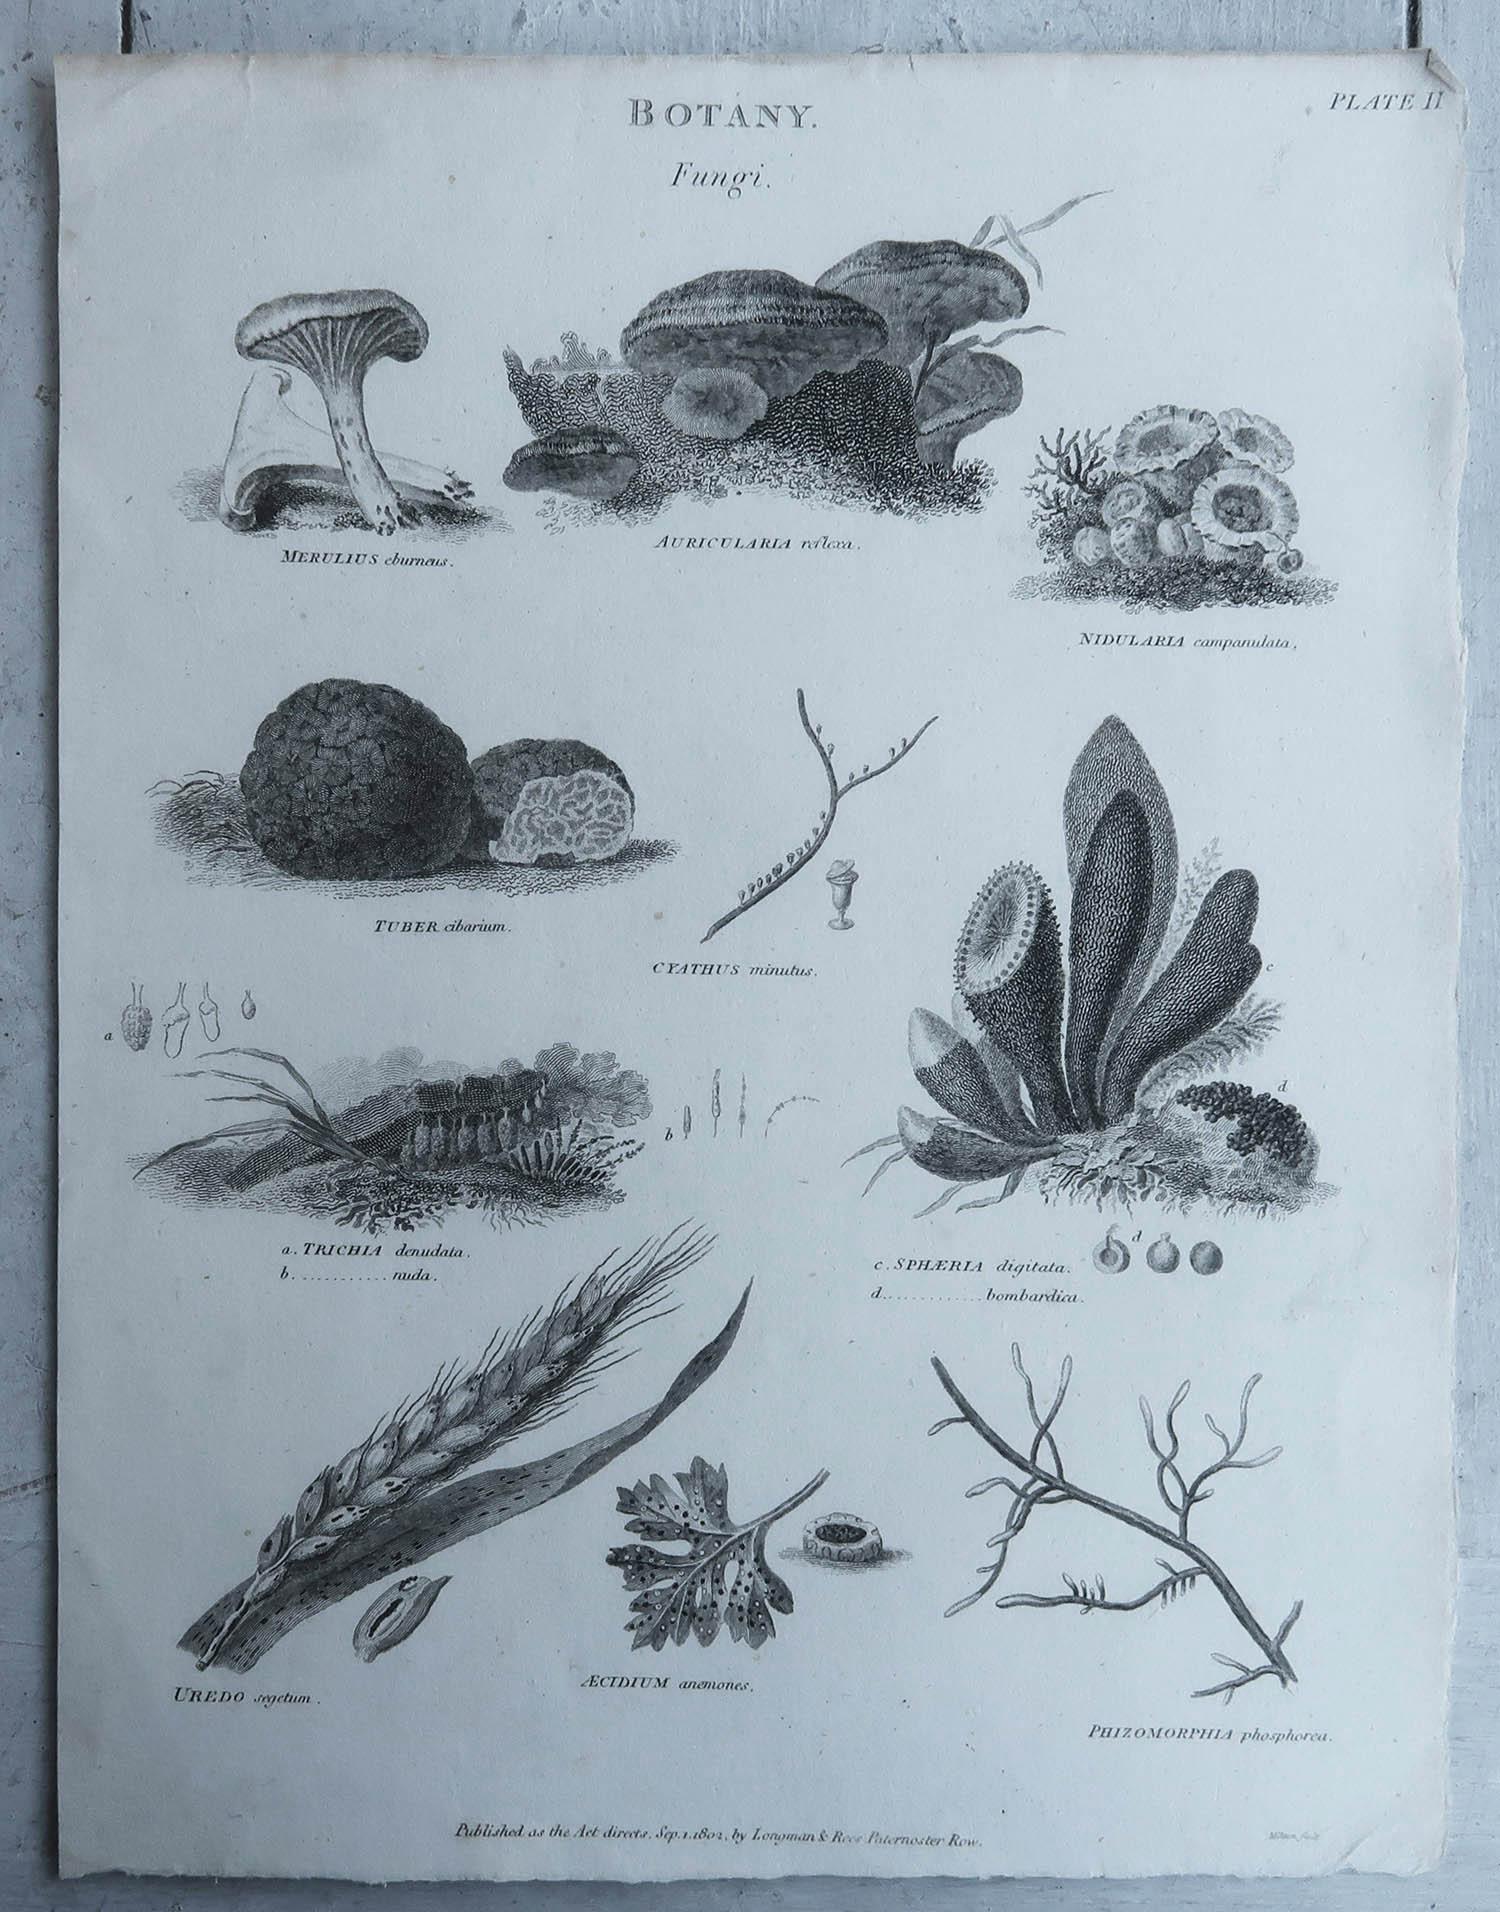 Georgian Original Antique Print of Fungi, Dated 1802 For Sale